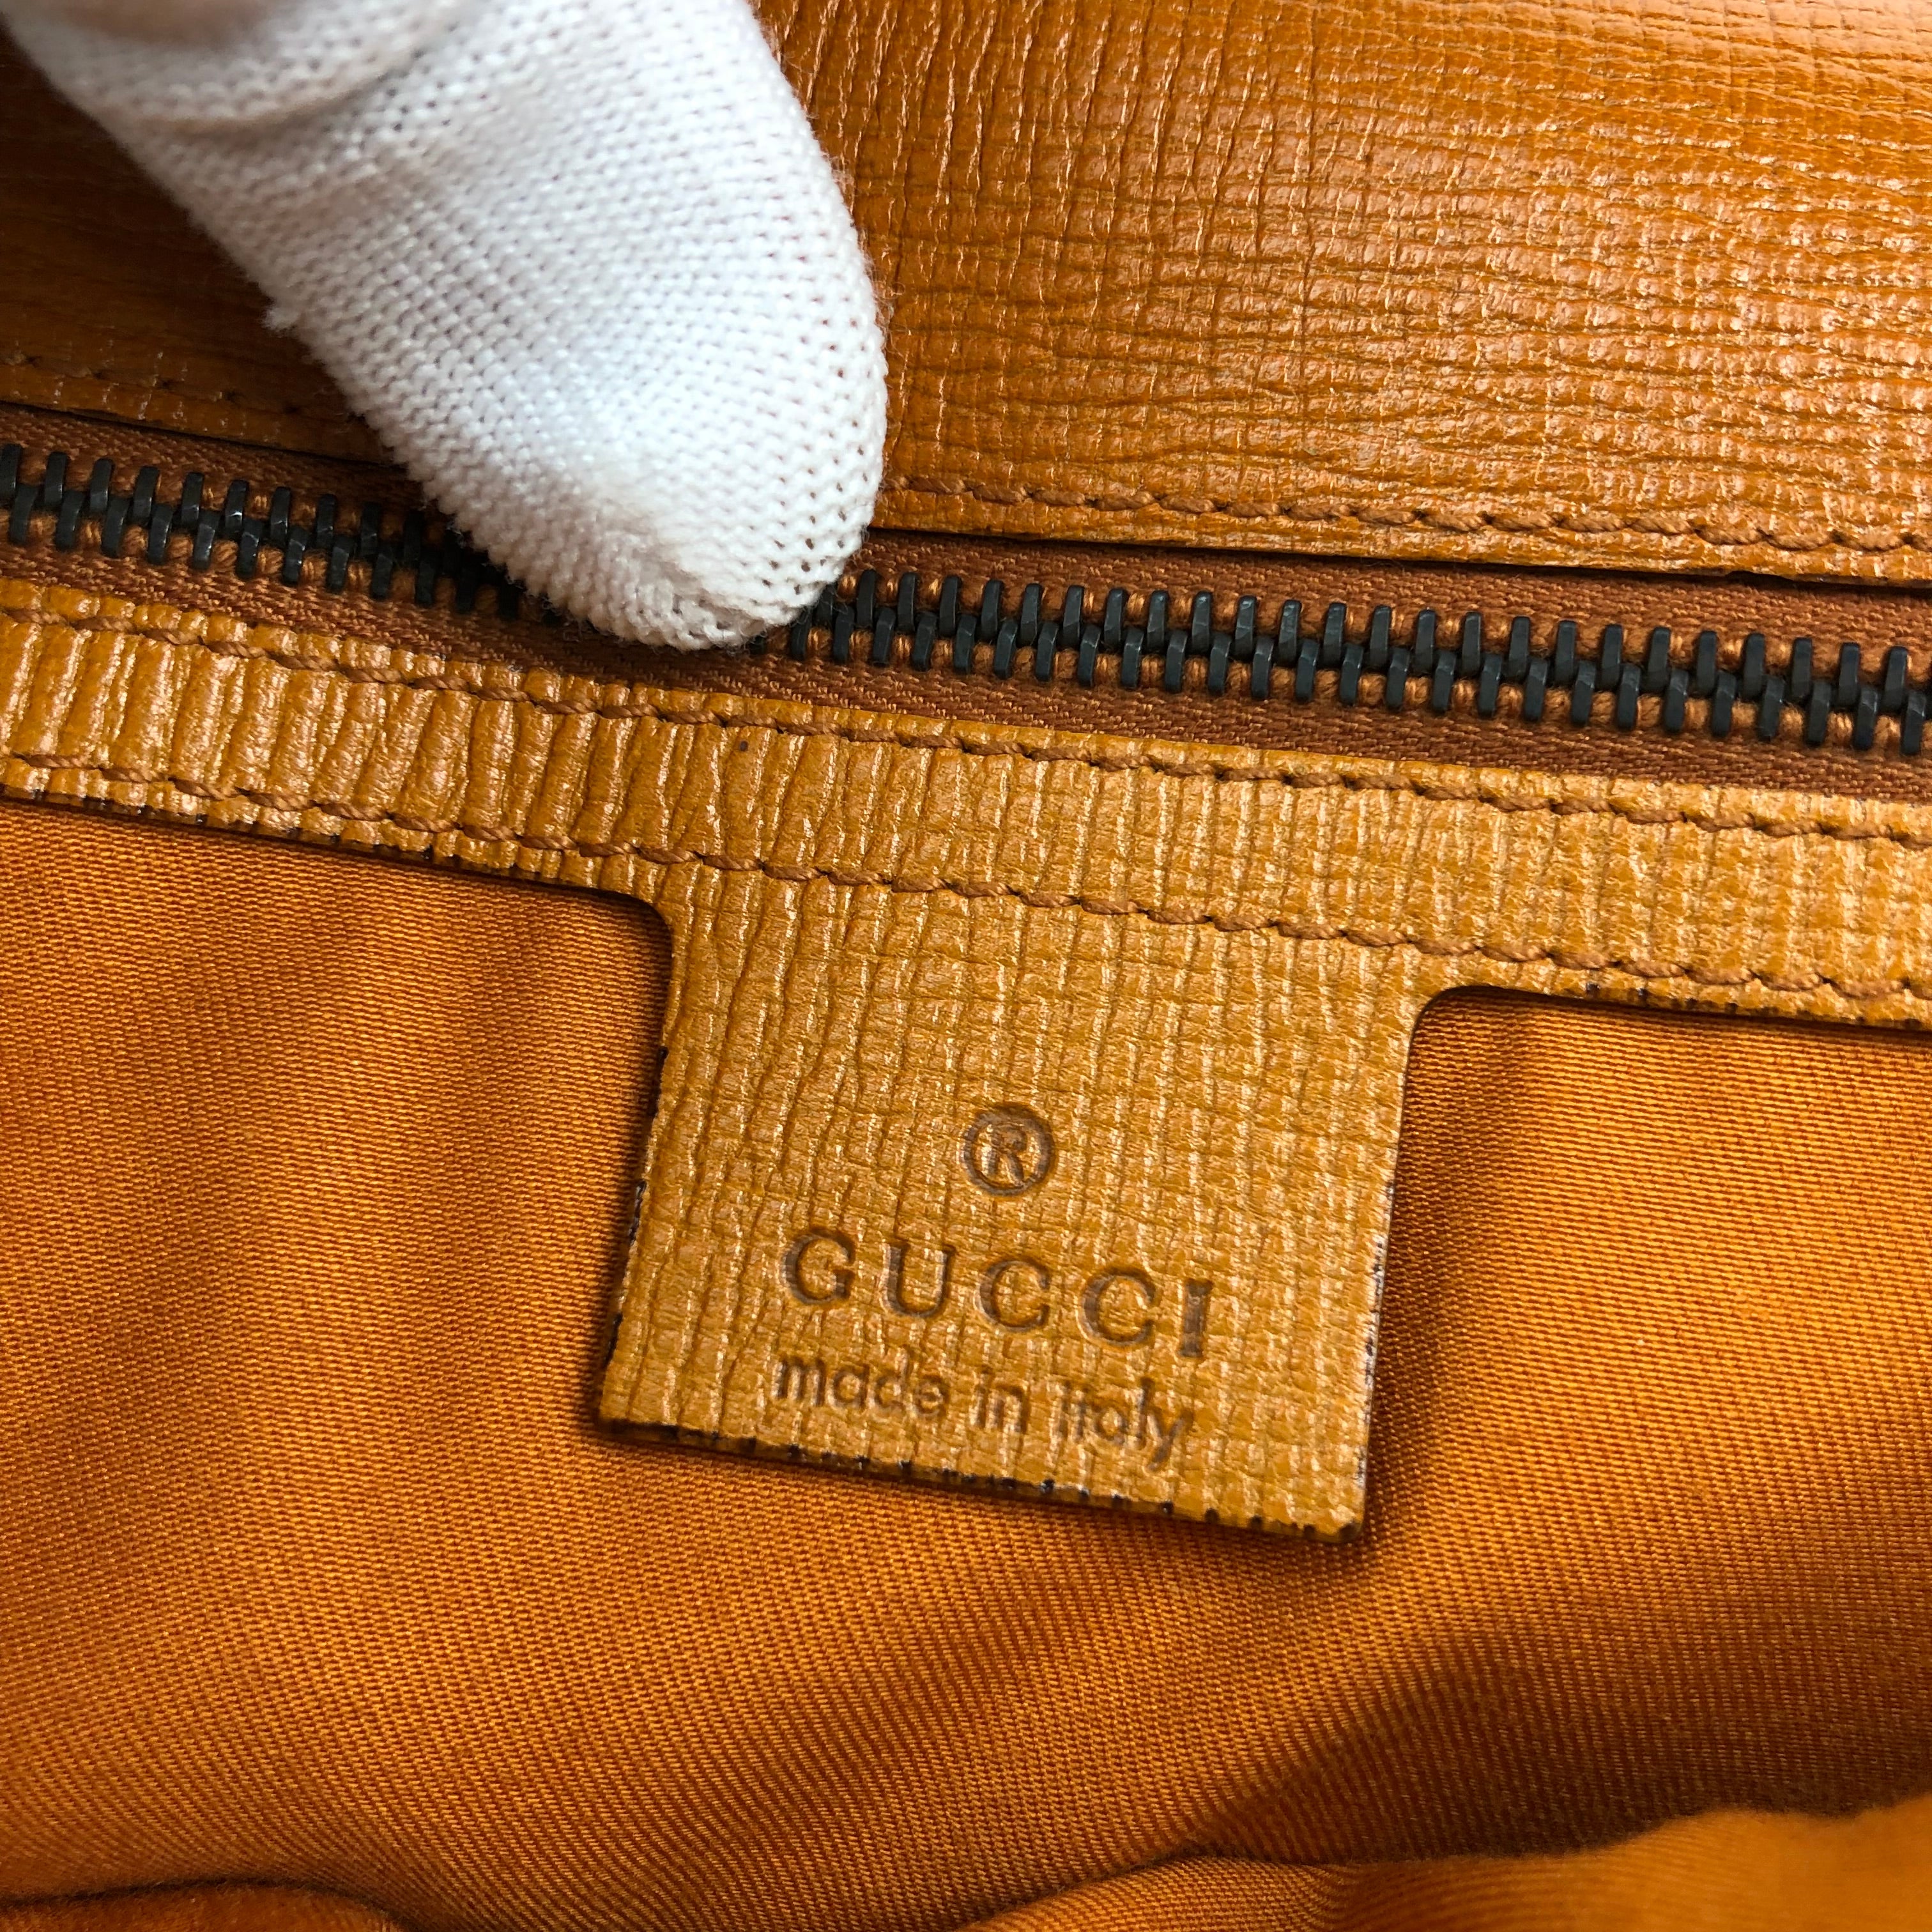 Gucci Horsebit Chain Leather Shoulder Bag